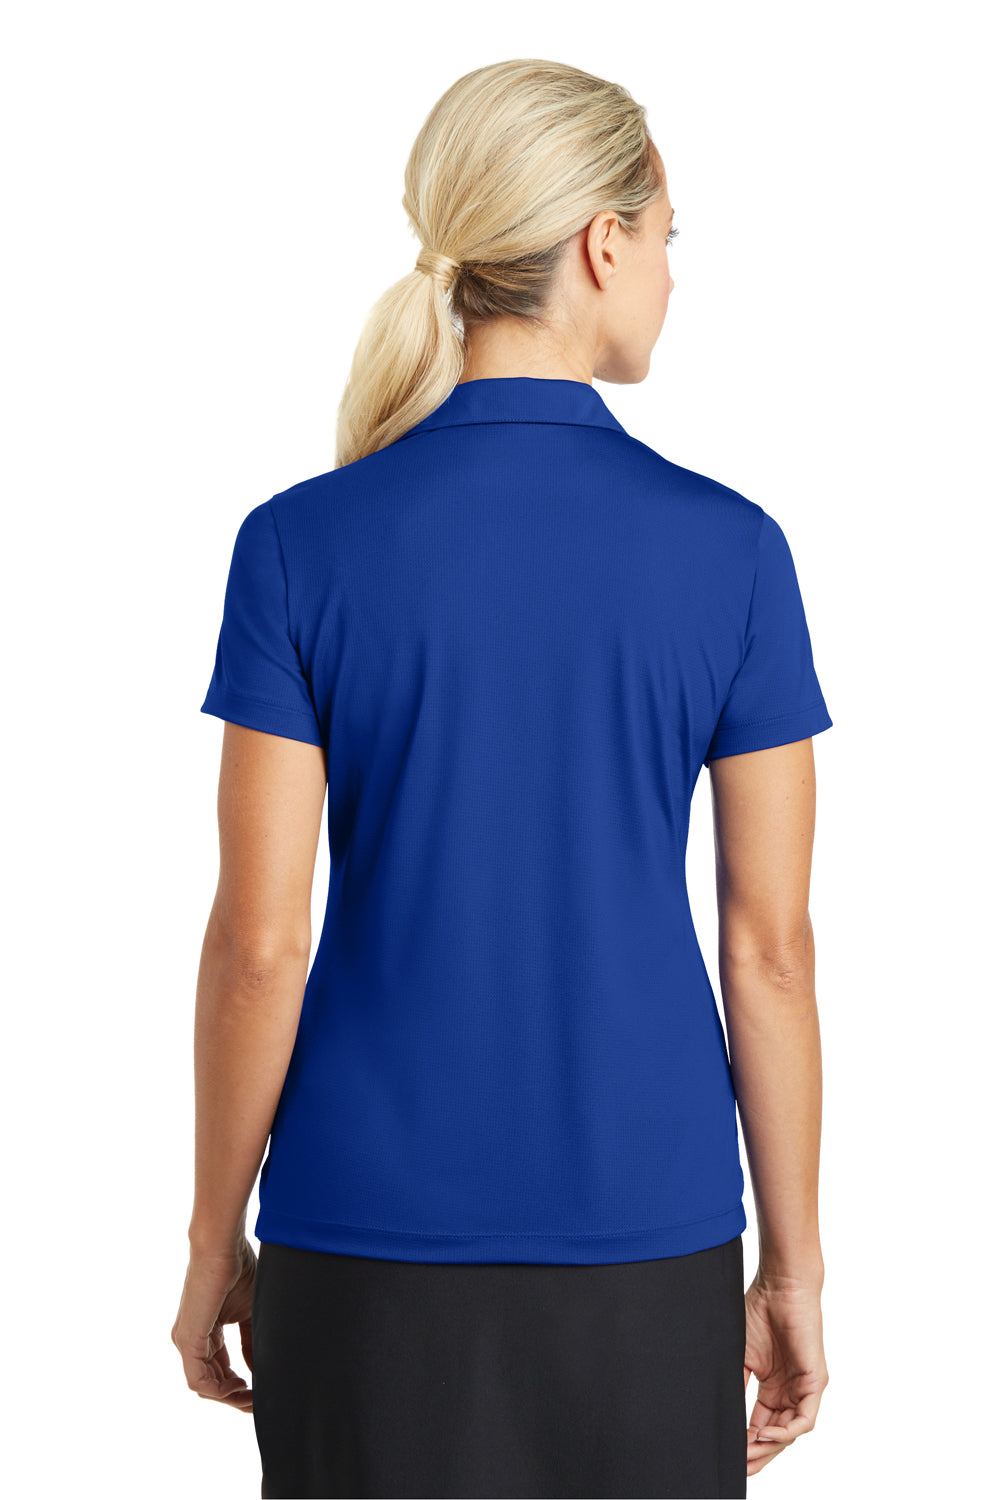 Nike 637165 Womens Dri-Fit Moisture Wicking Short Sleeve Polo Shirt Royal Blue Model Back